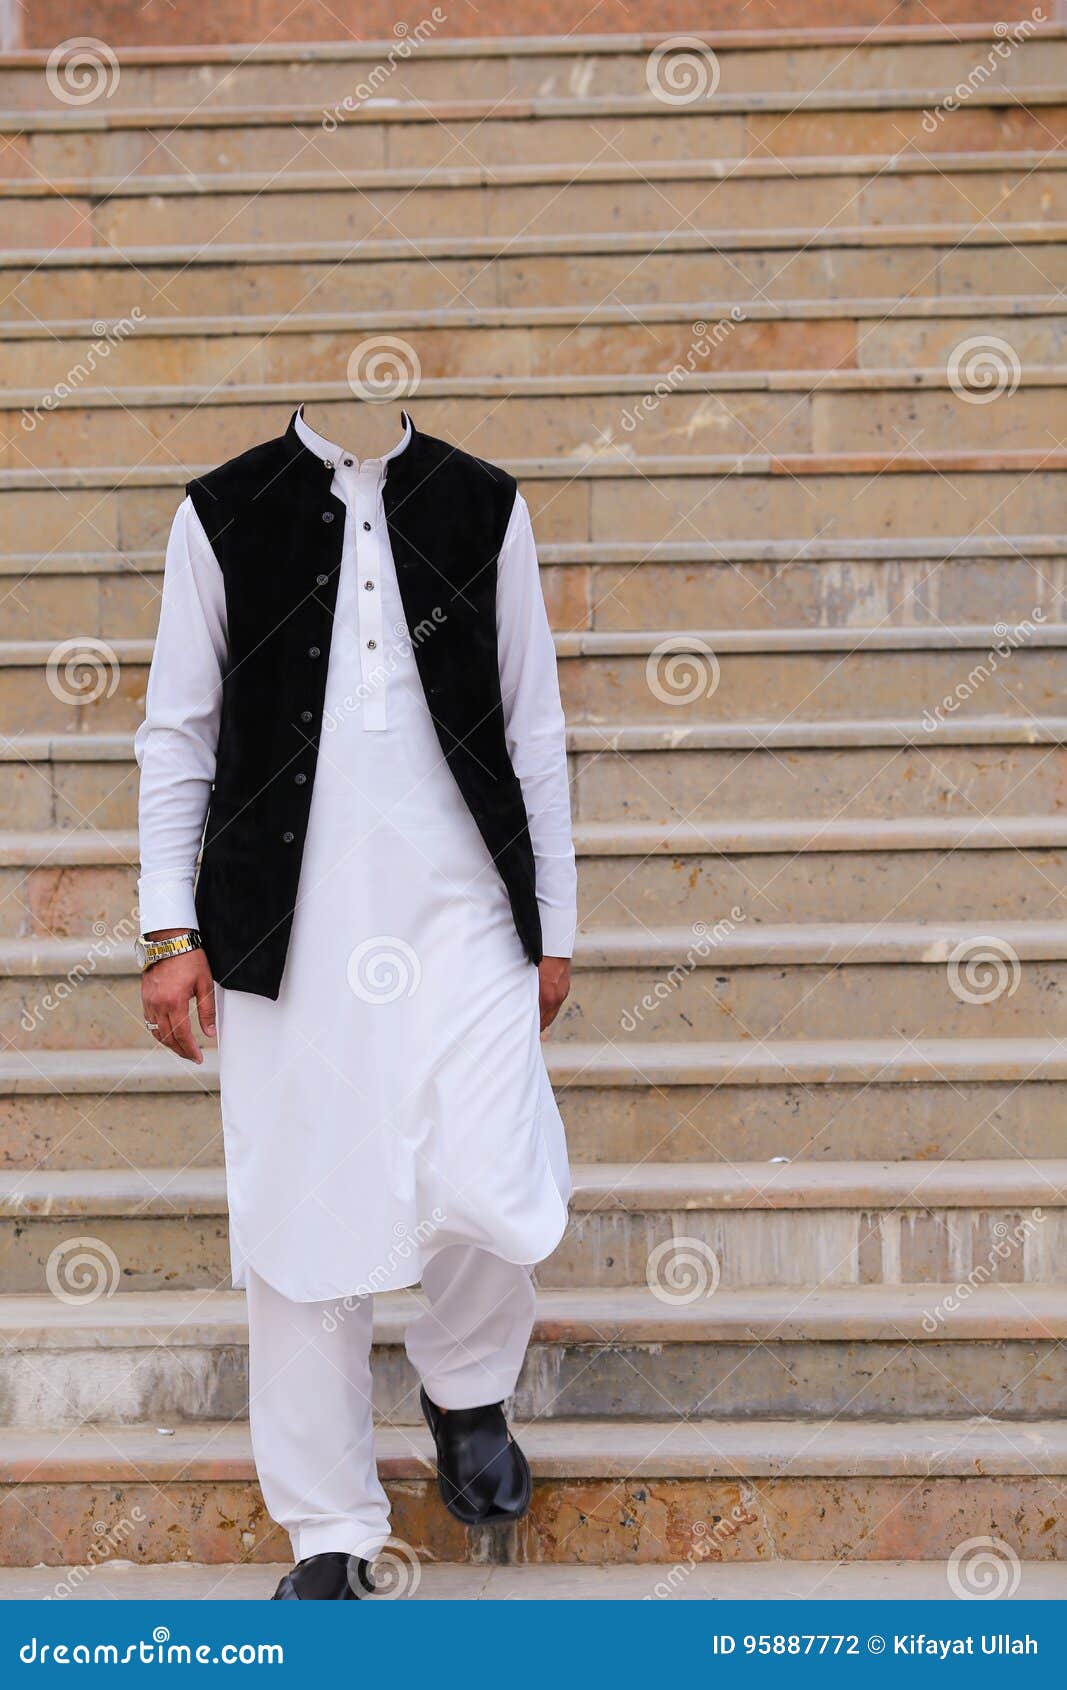 salwar kameez with shoes